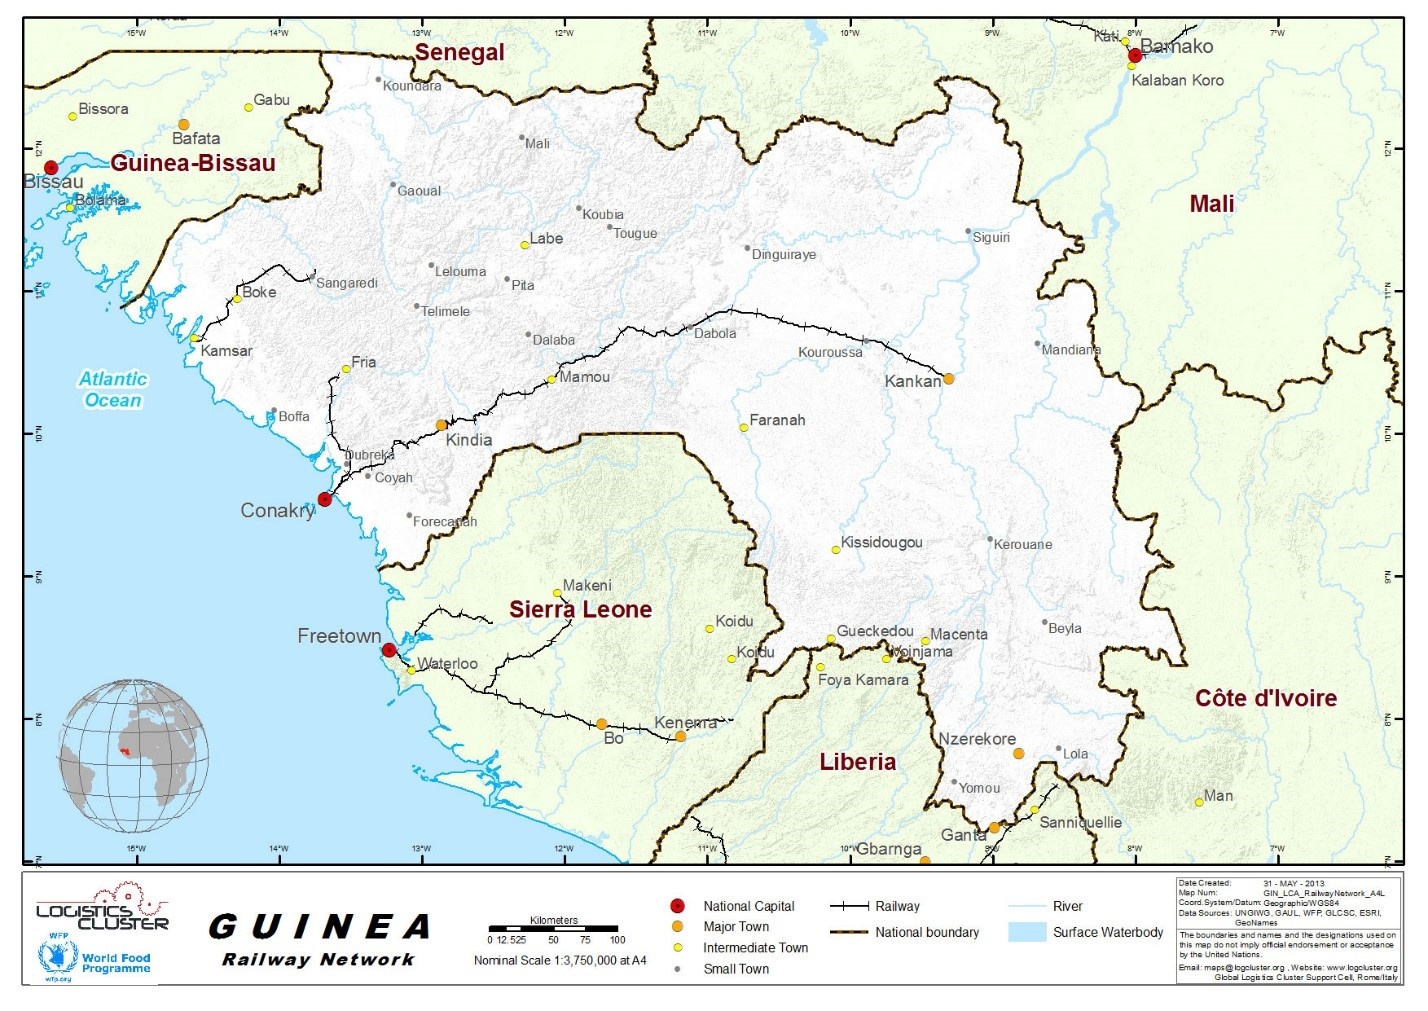 GLCSC LCA Guinea Map%2520Railway%2520Network 151228%2520xls  Version 1 ModificationDate 1460099877000 Api V2